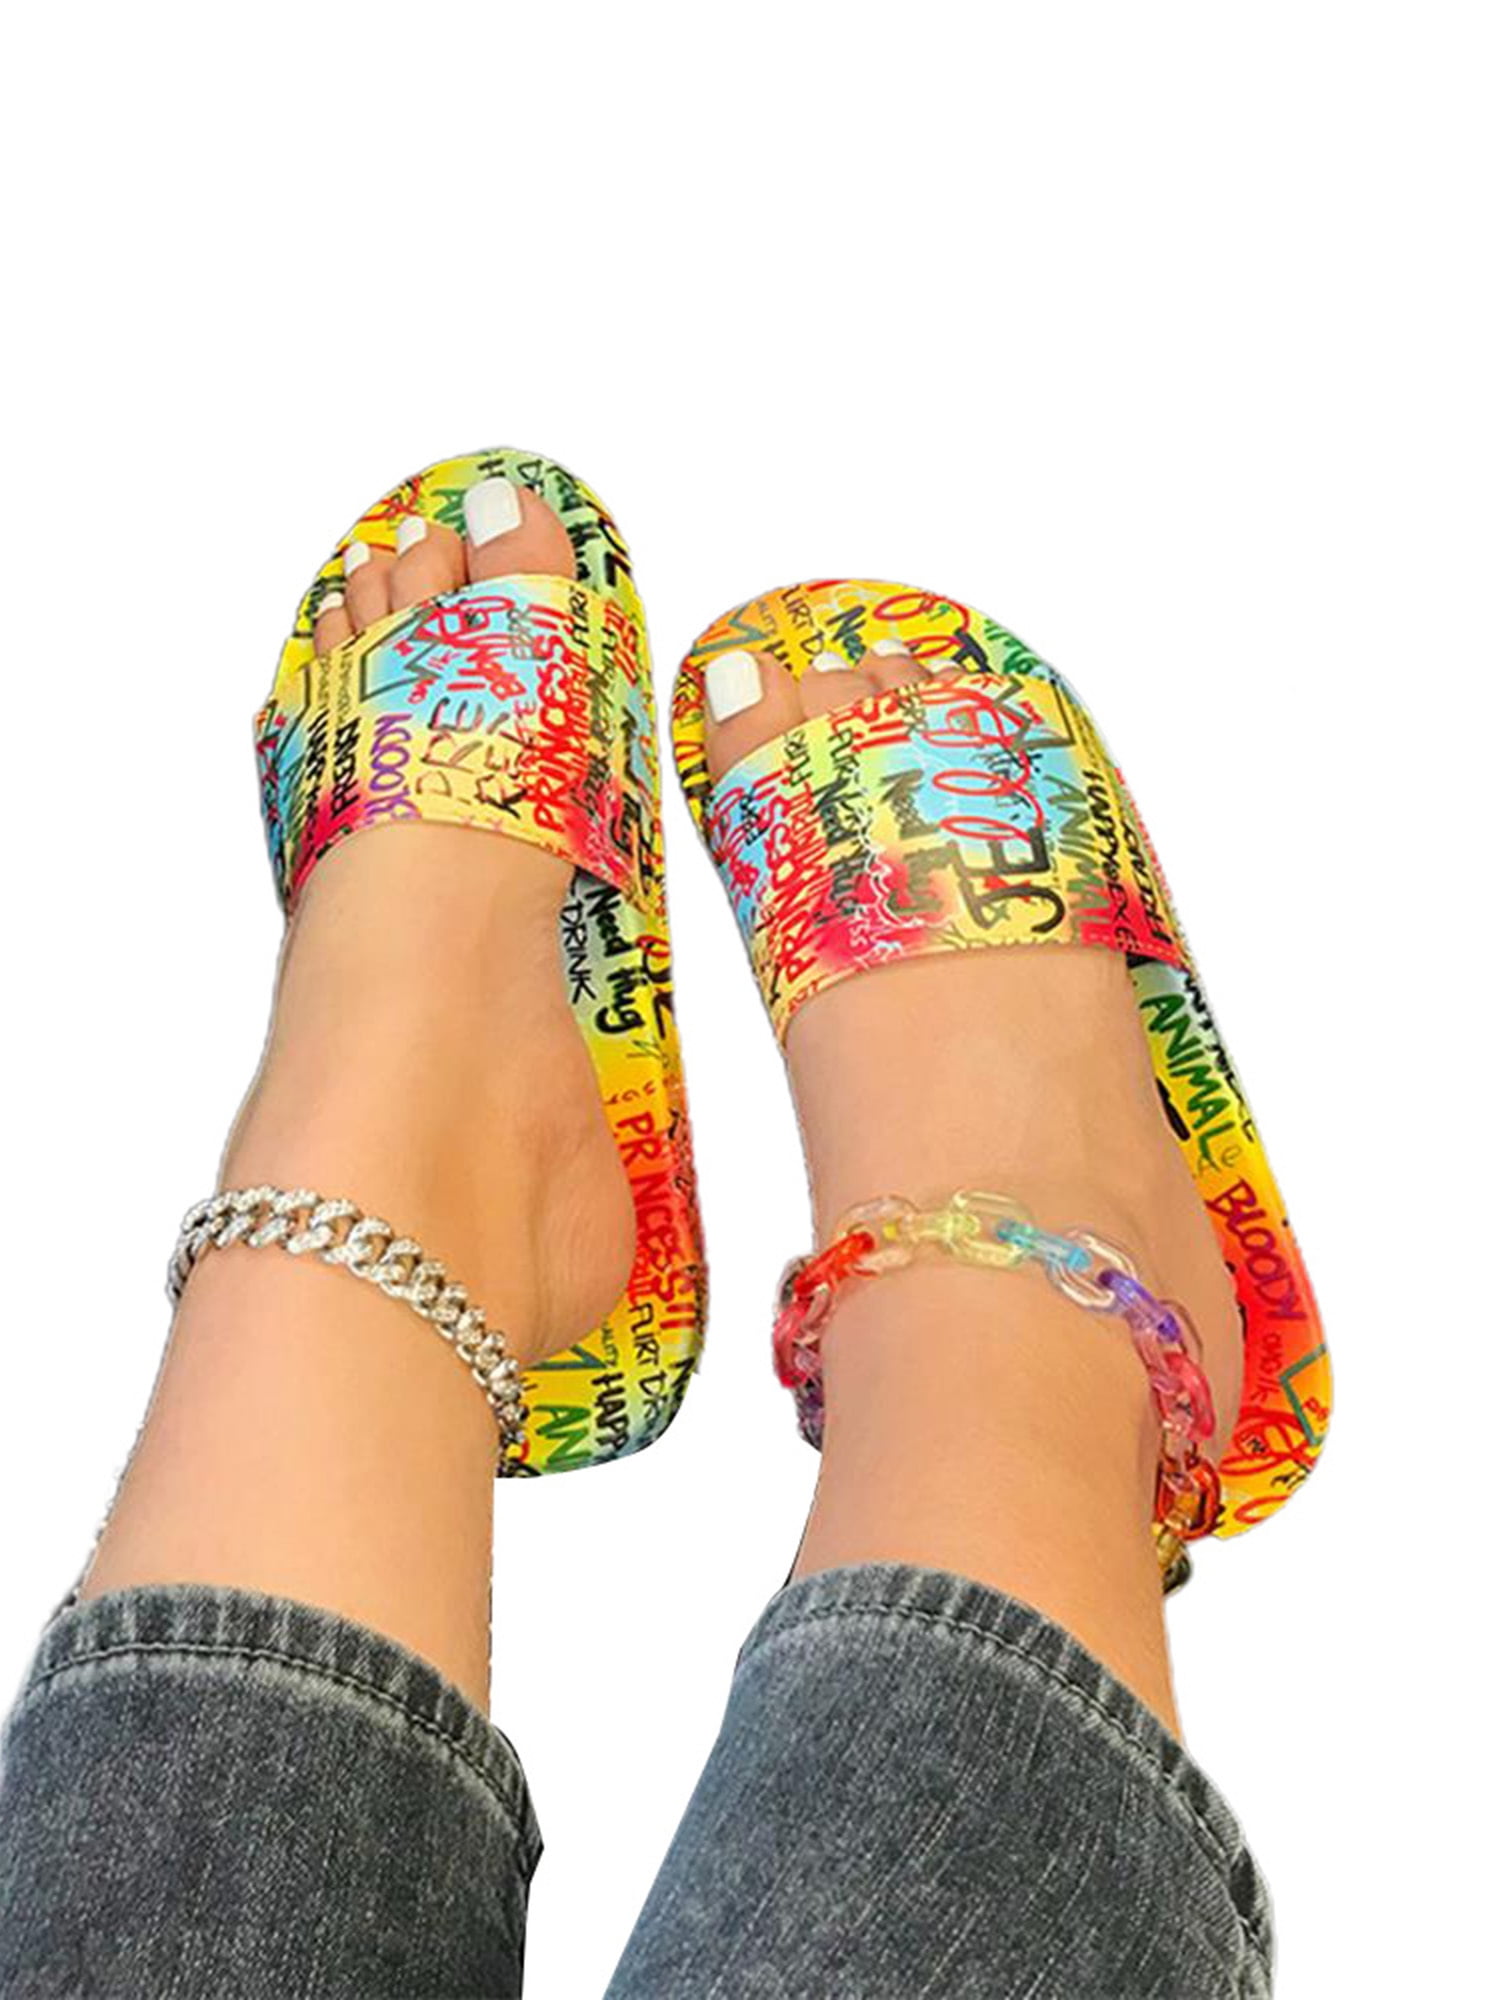 Yellow Graffiti DJ Back Slippers Home Slip-On Sandals Flat Sleeppers Shoes Custom Flip-Flops Adults 